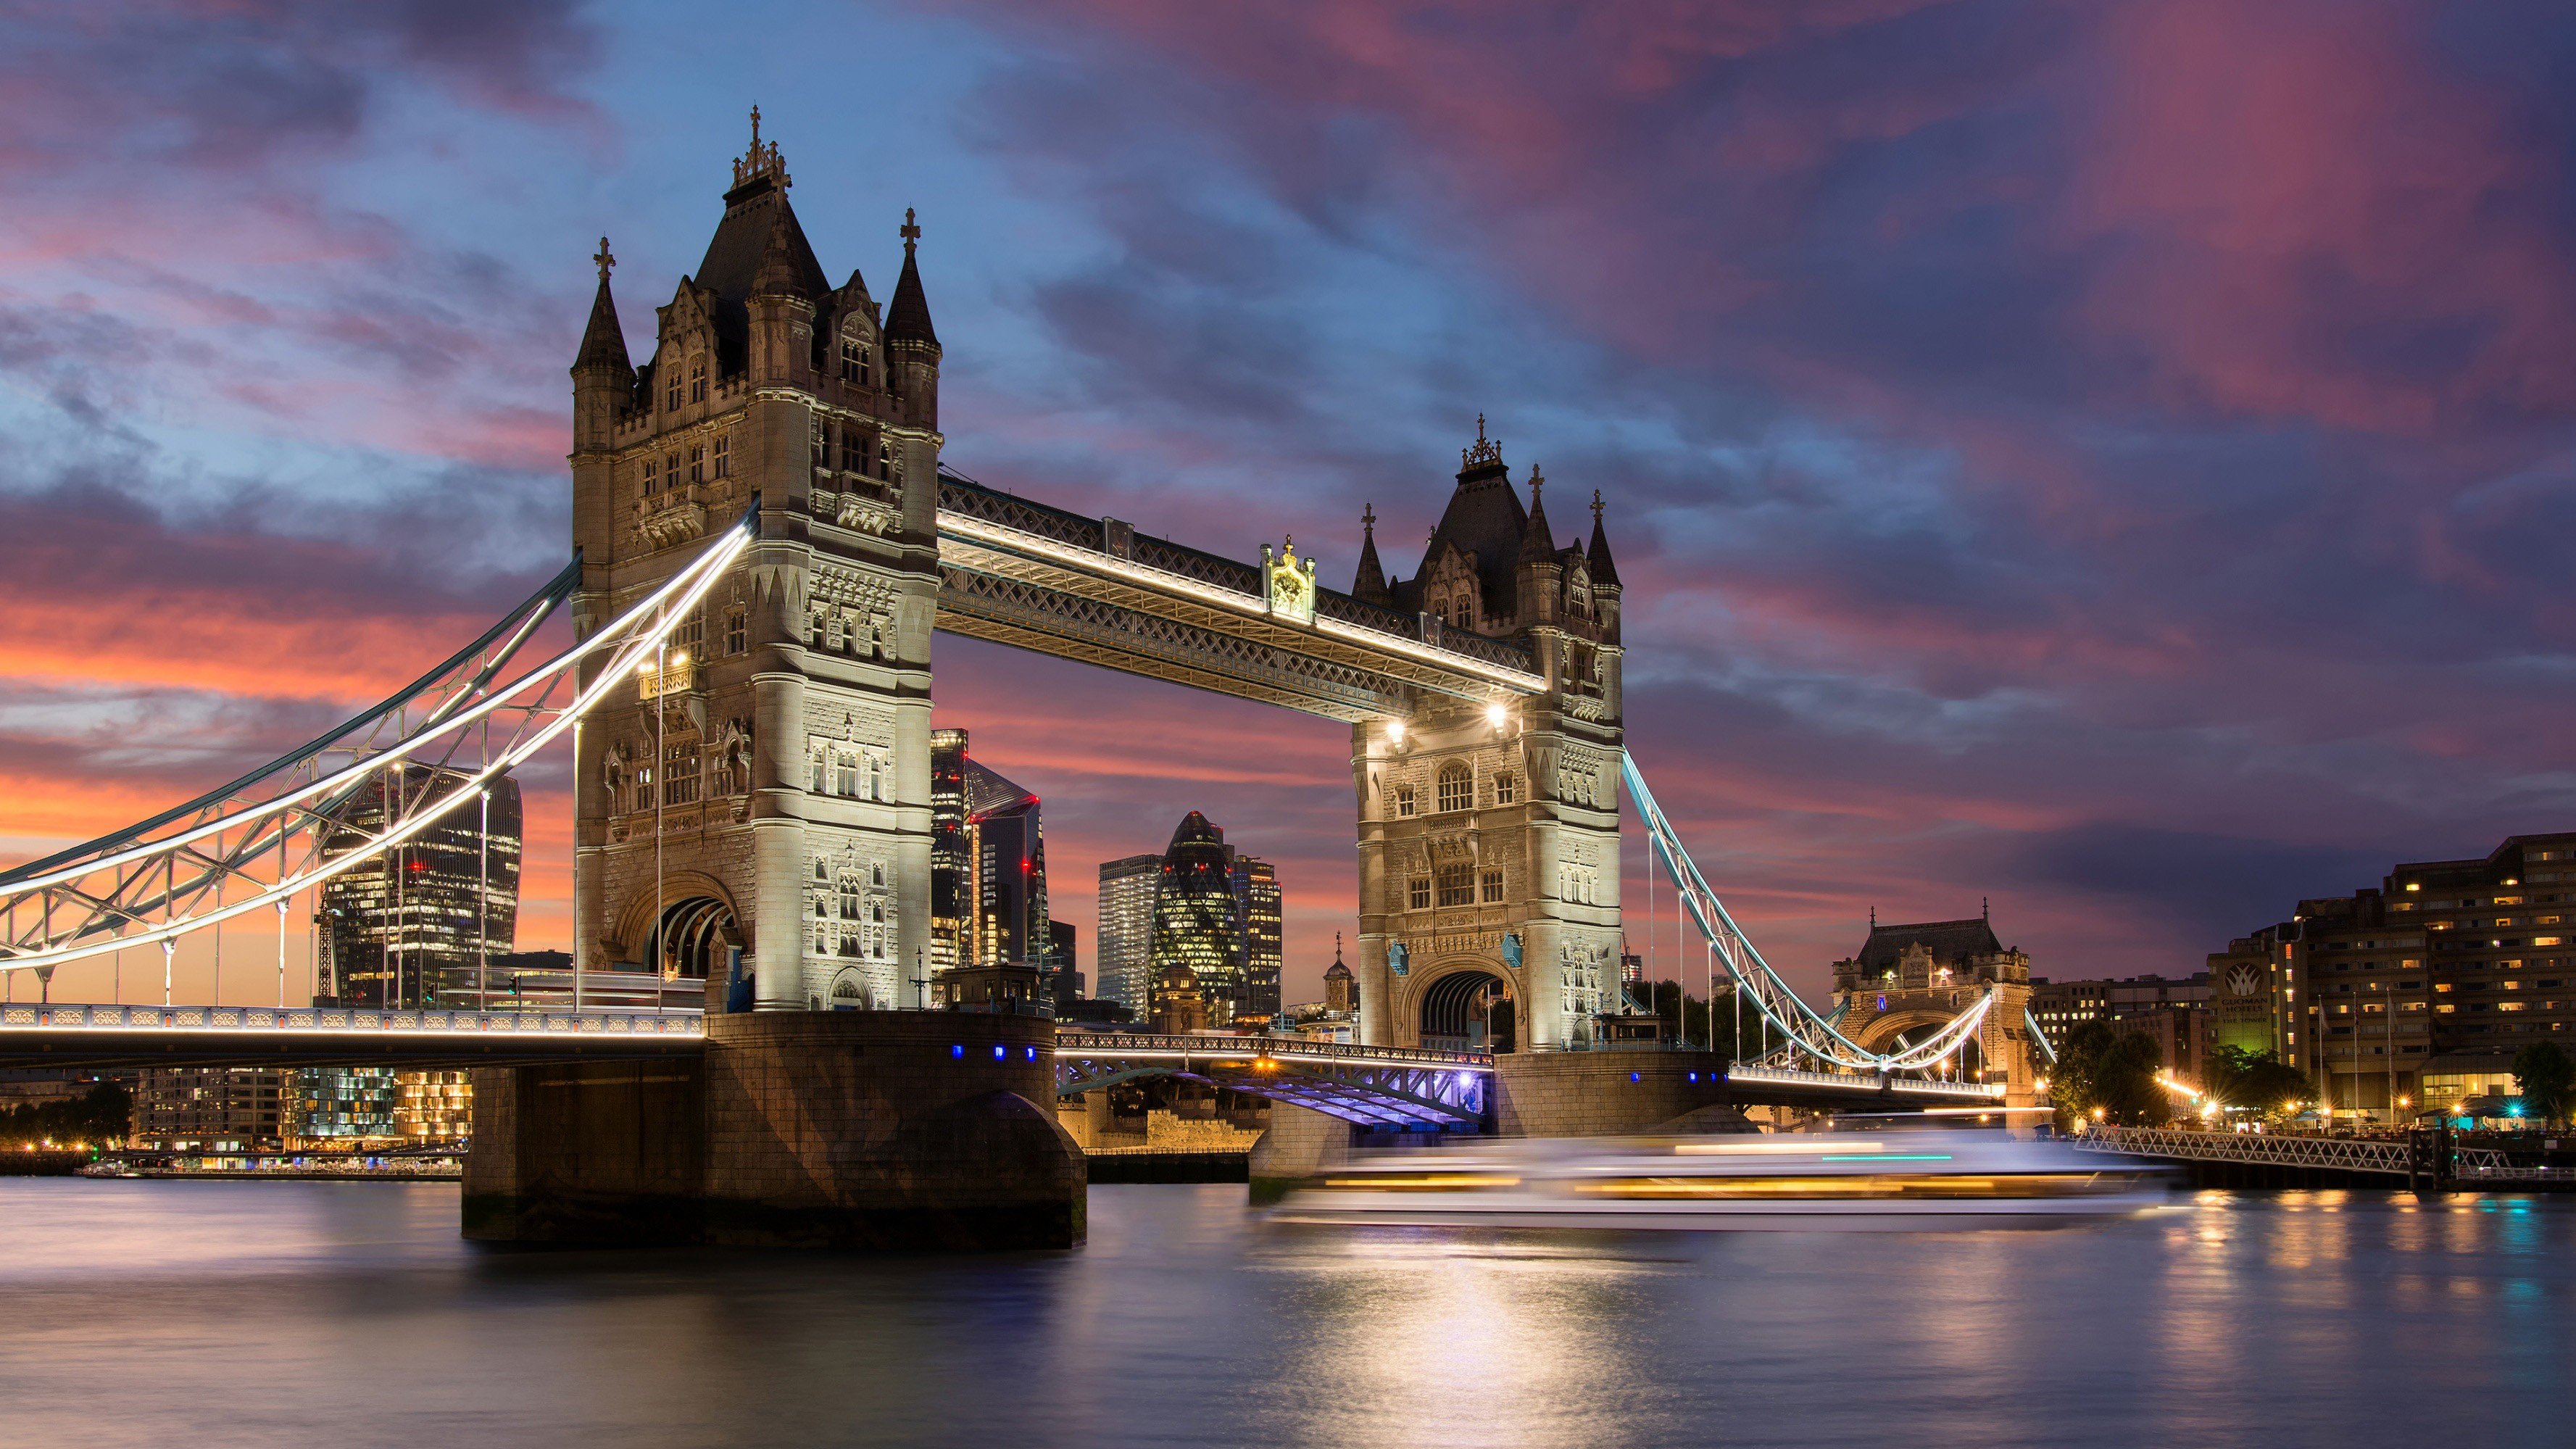 Fondos de pantalla Tower bridge in London